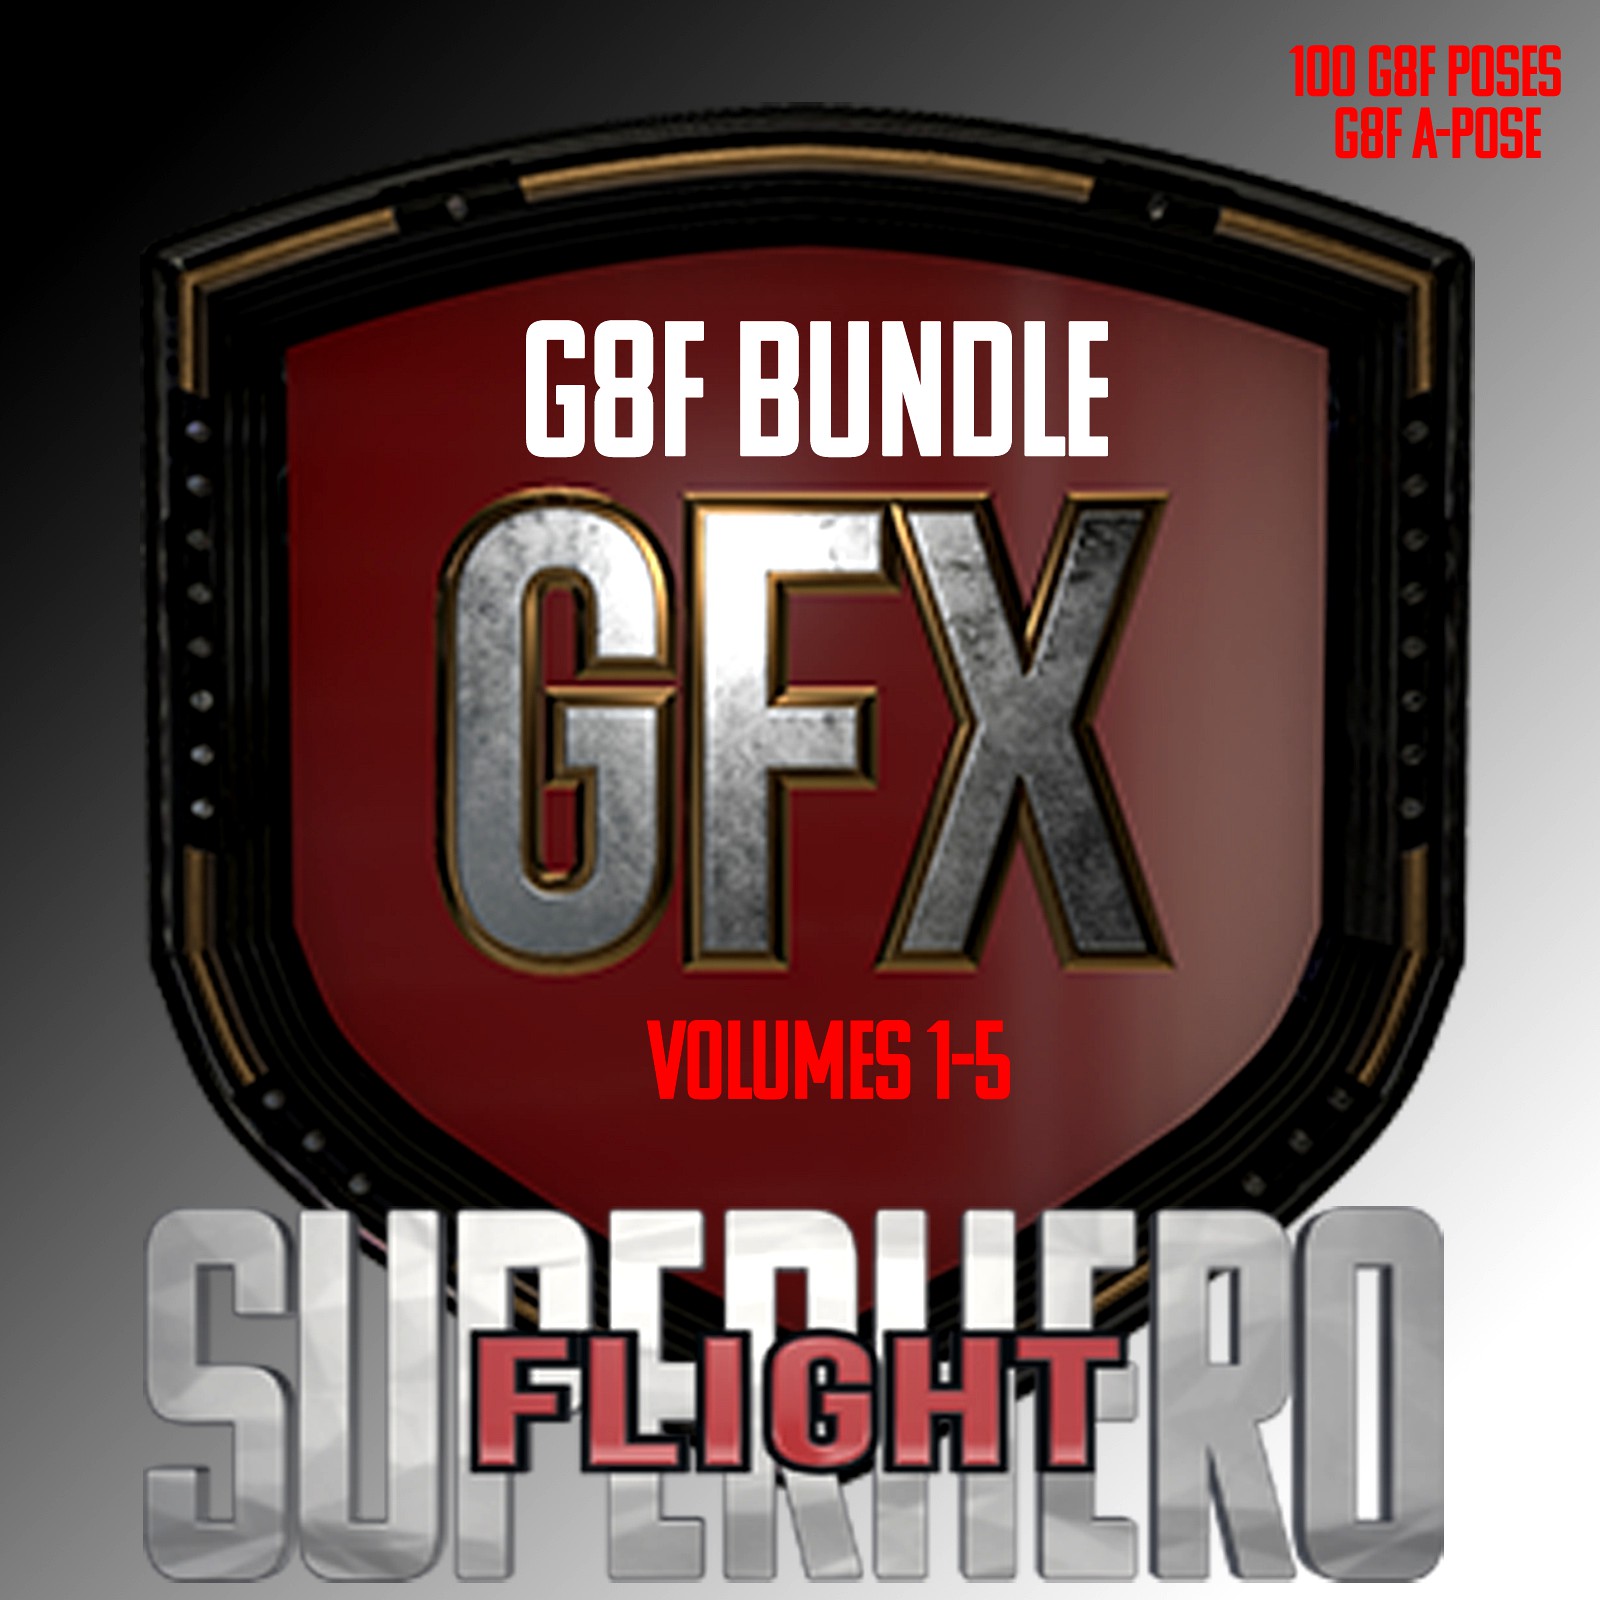 SuperHero Flight Bundle for G8F